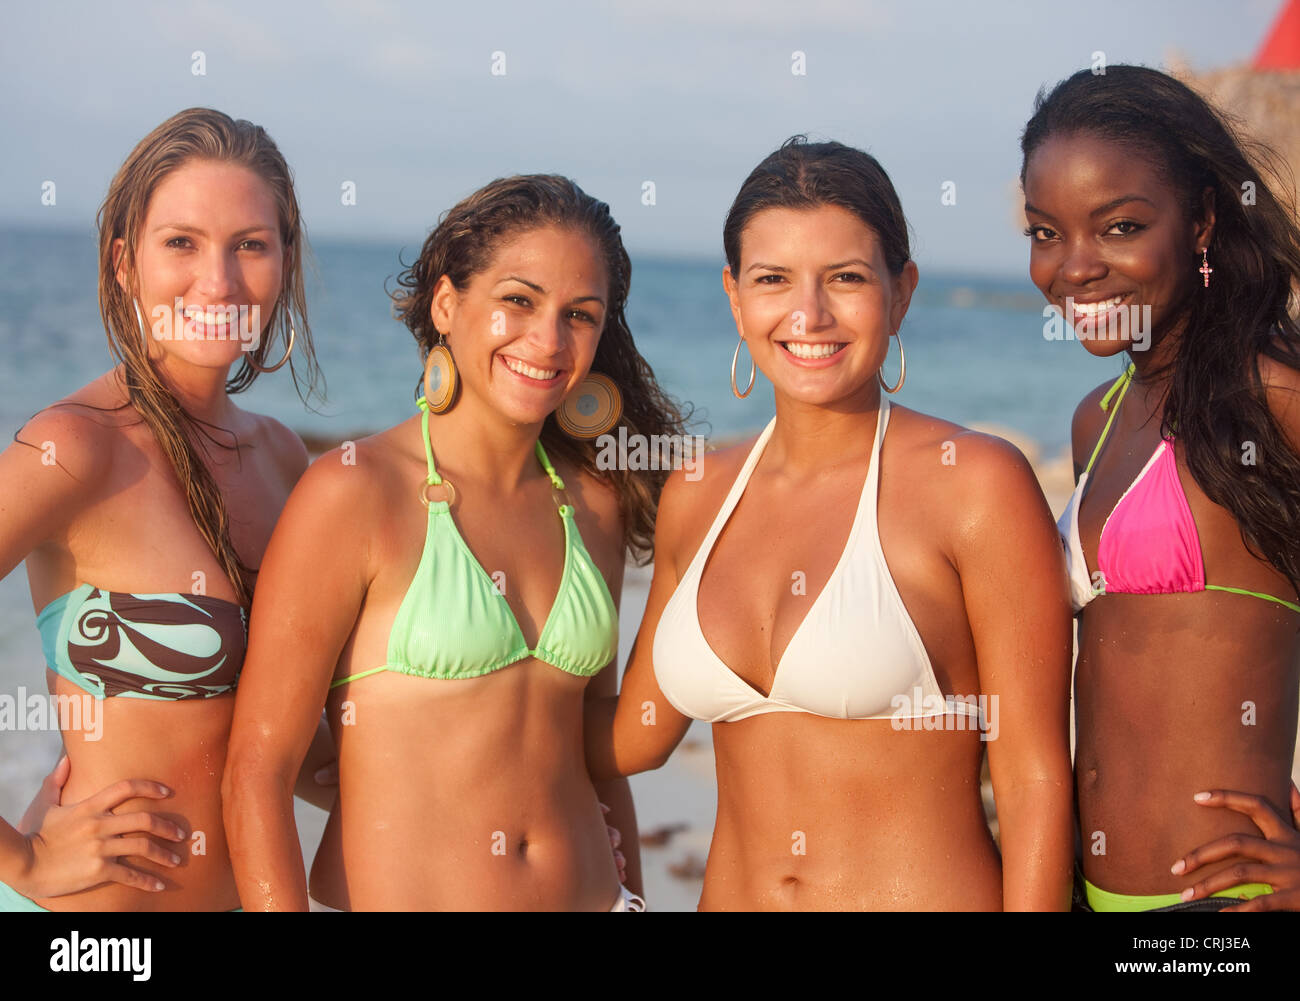 Foto group women beach alors on